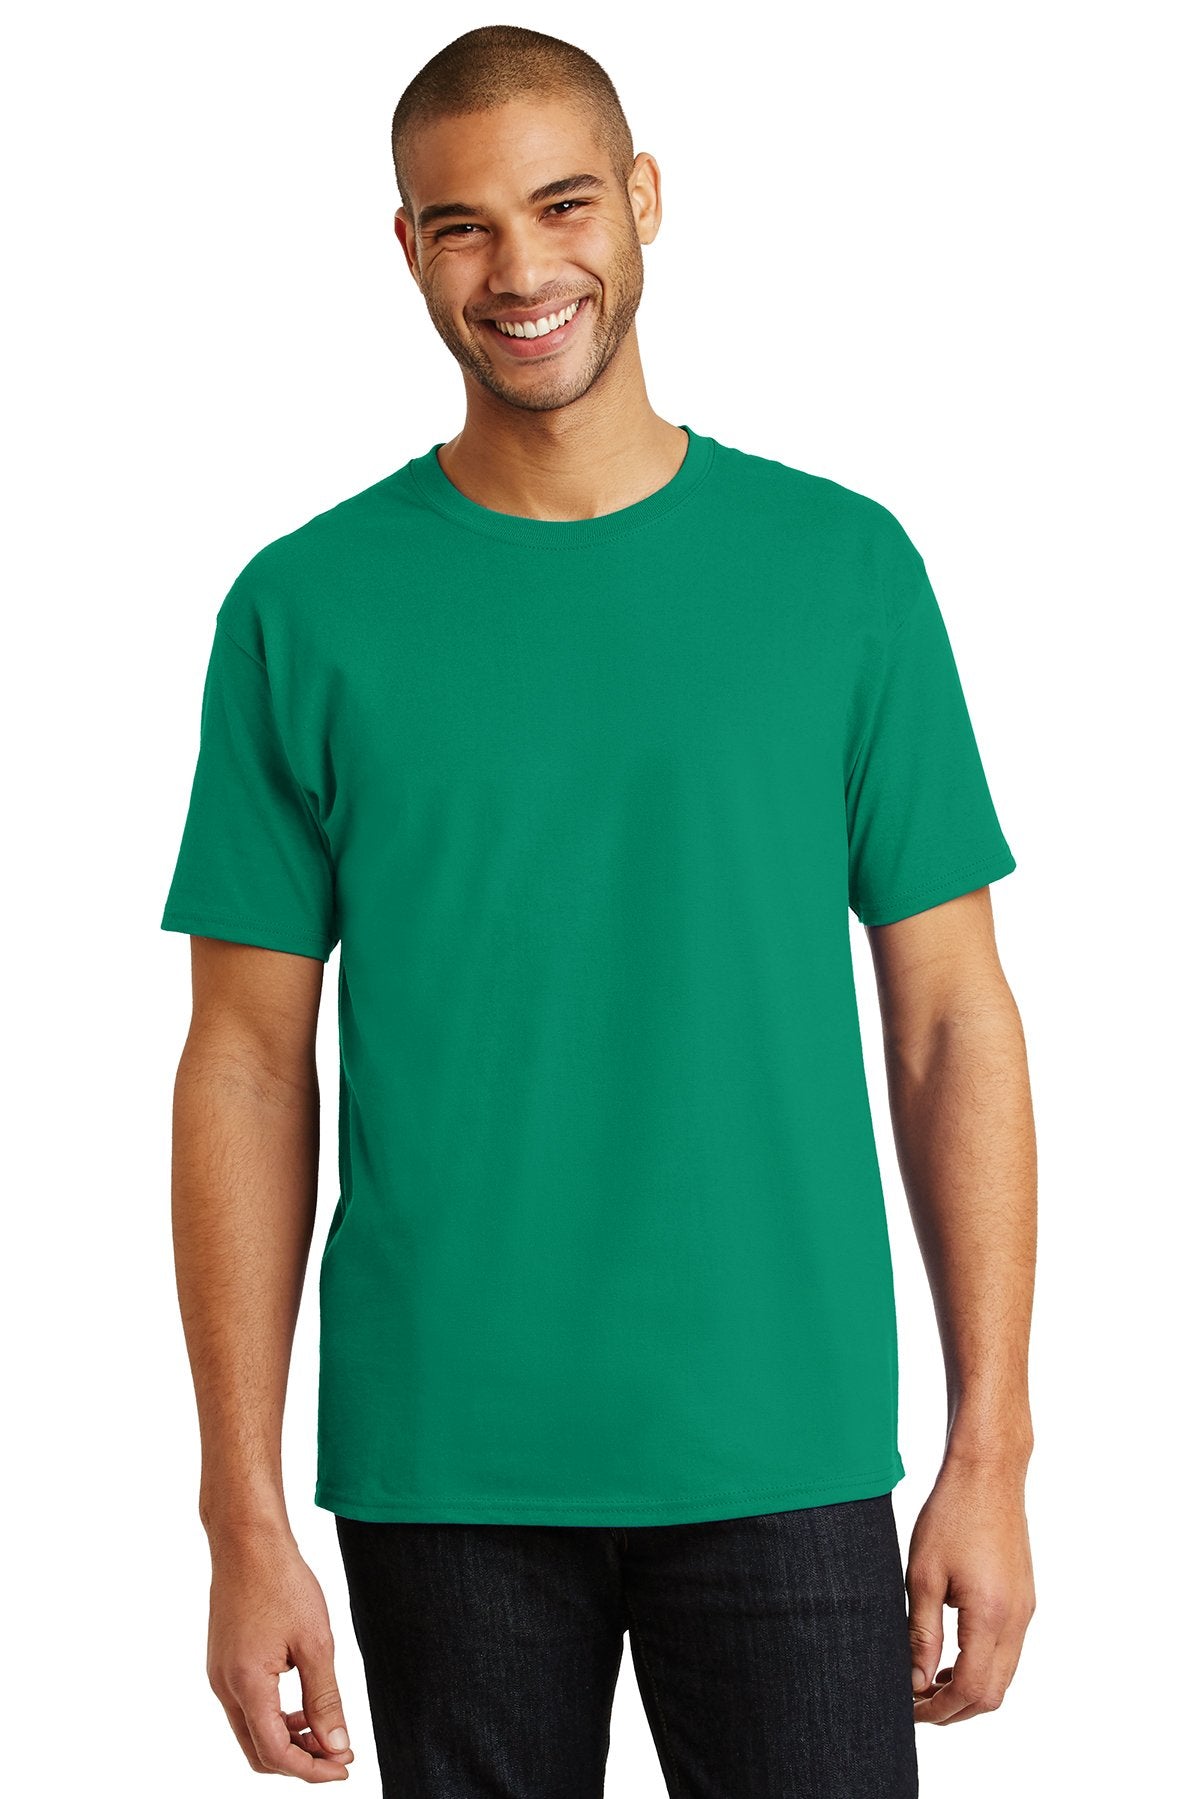 hanes tagless cotton t shirt 5250 kelly green